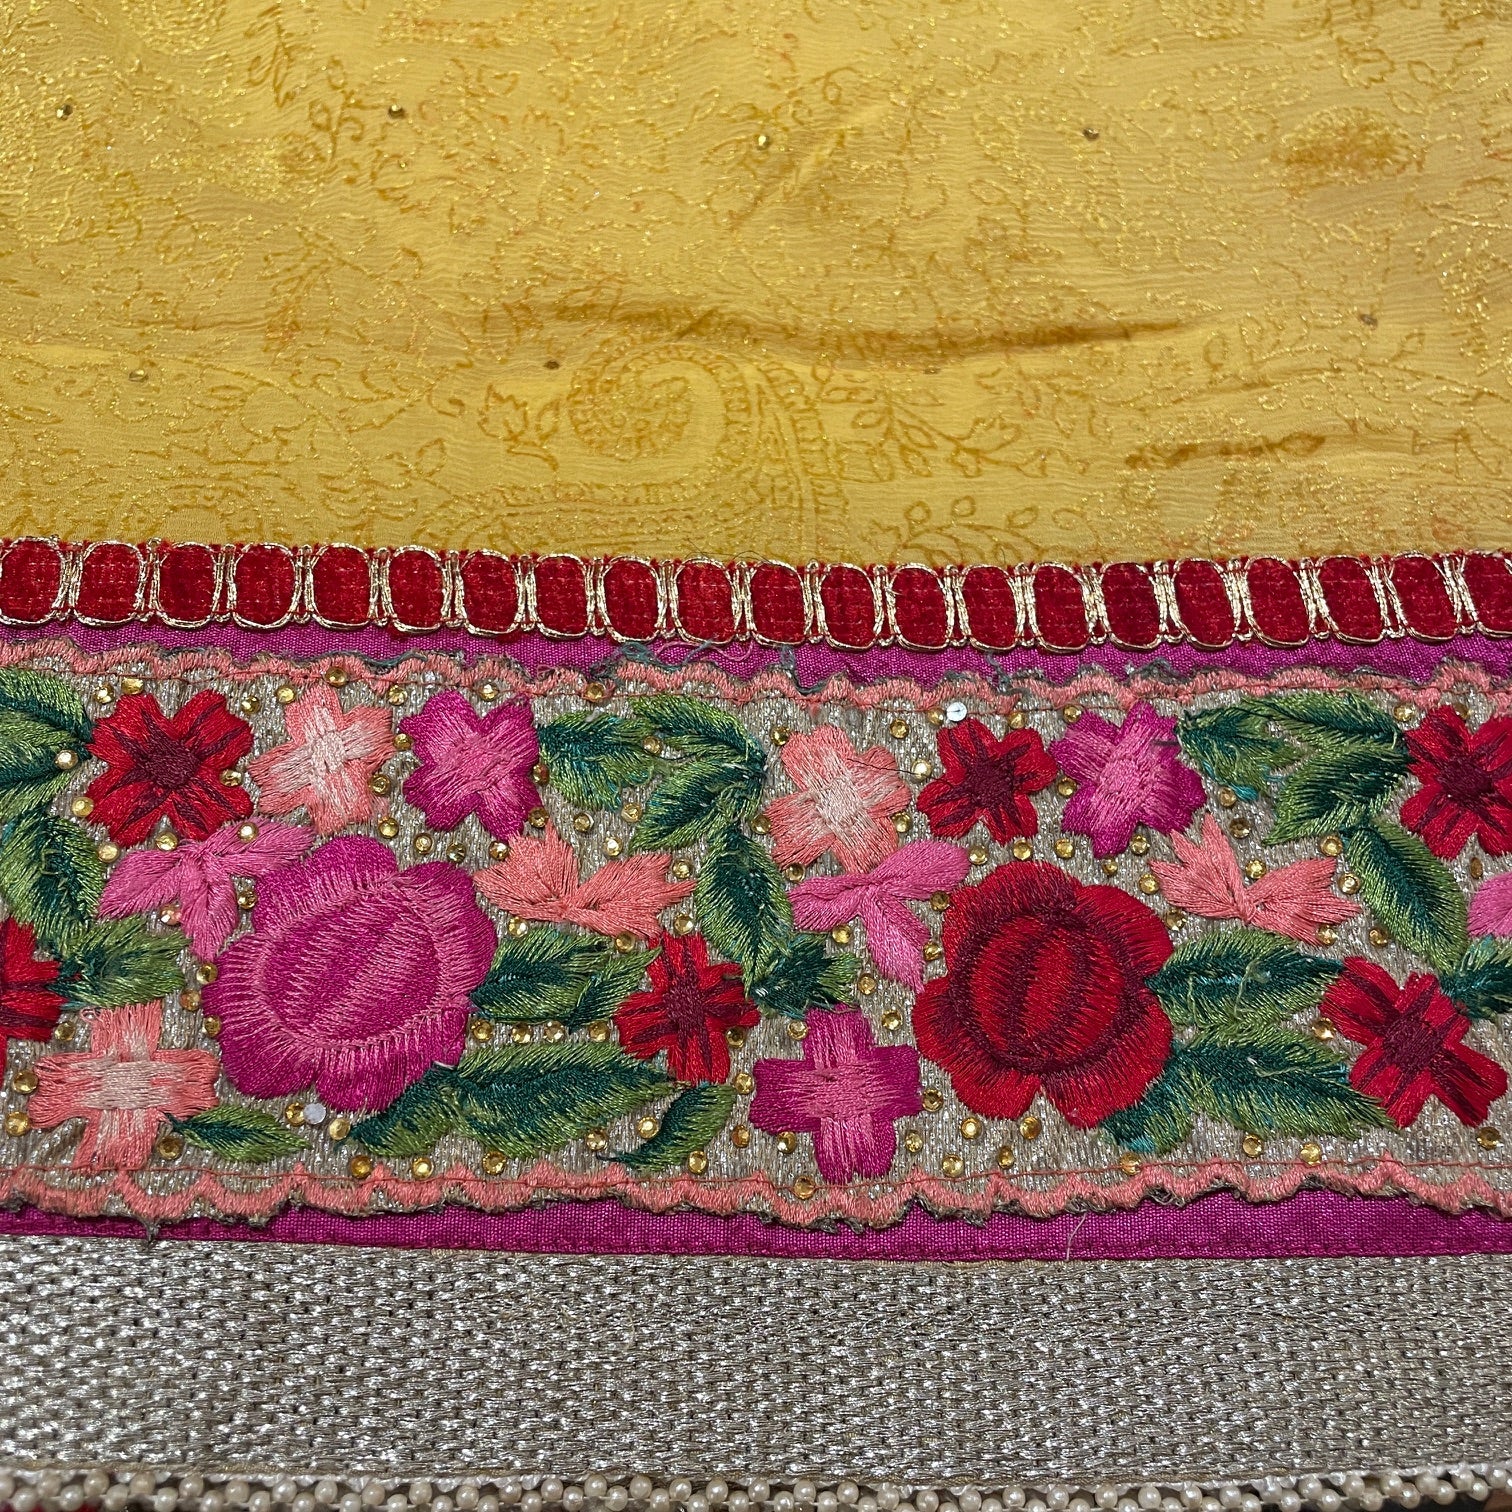 Yellow Chiffon Silk Embroidered Saree - Vintage India NYC